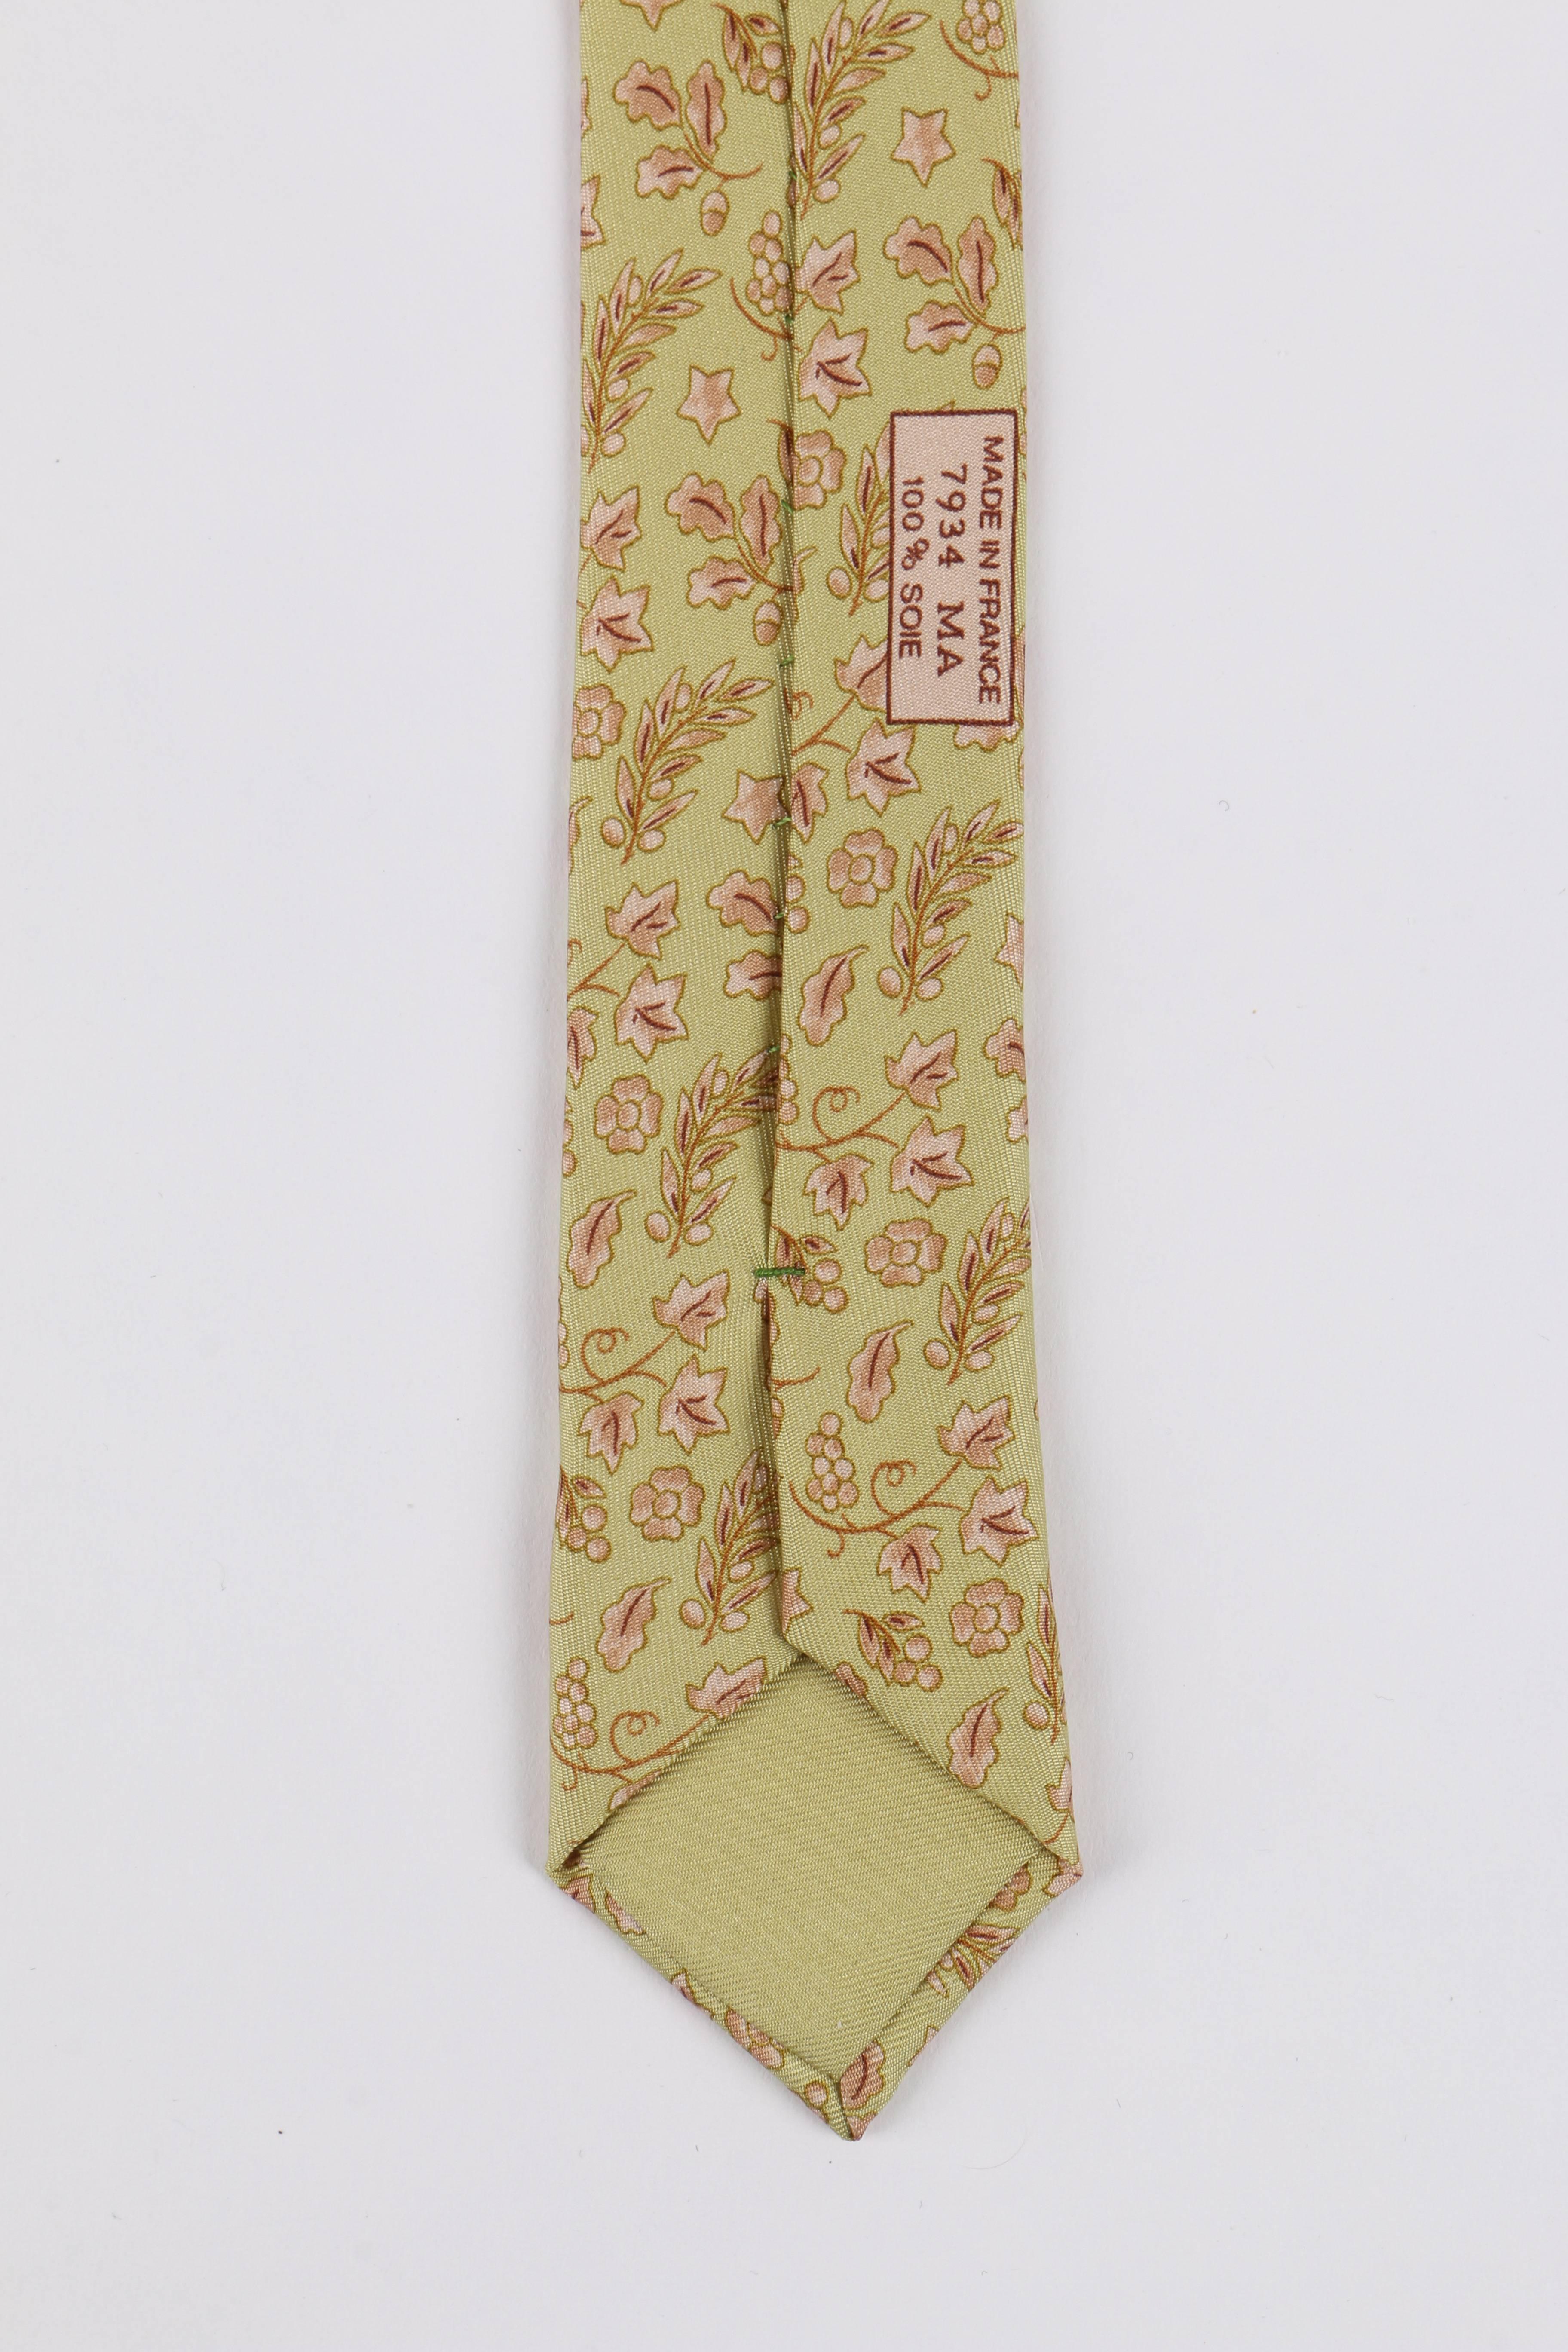 HERMES Chartreuse Grape Vine Foliage Print Silk 5 Fold Necktie Tie 7934 MA 1